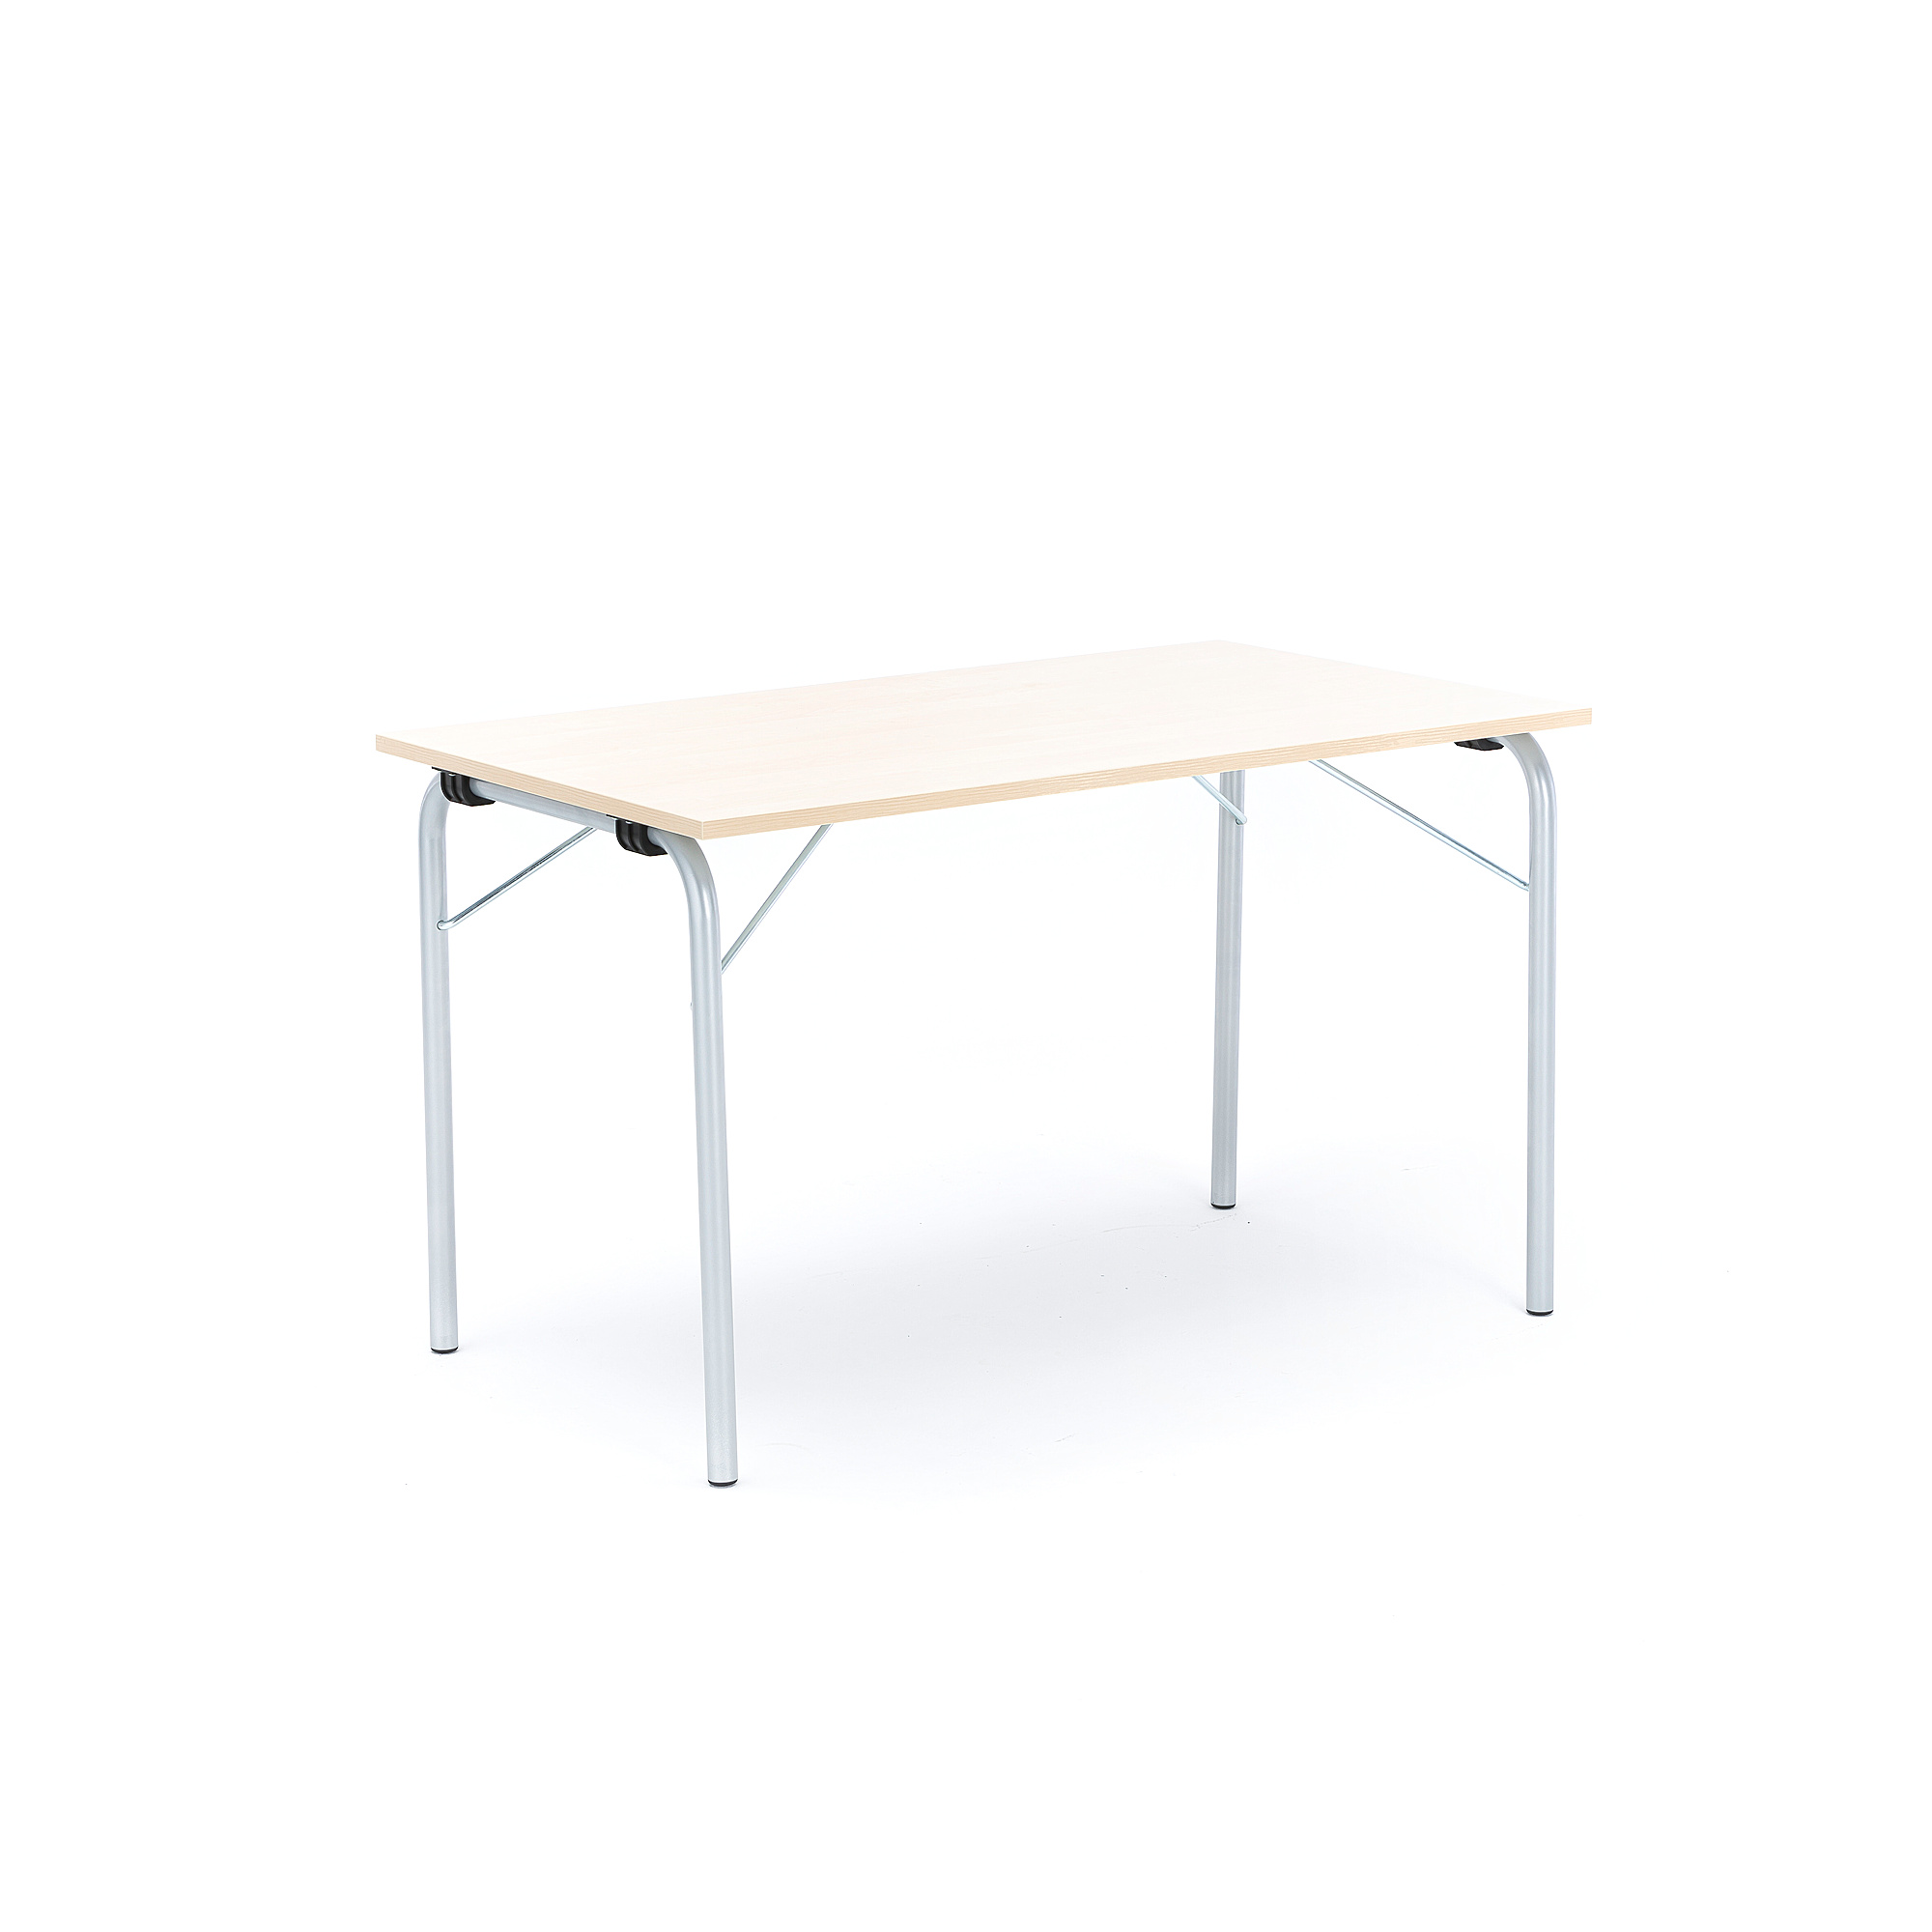 Skládací stůl NICKE, 1200x700x720 mm, stříbrný rám,lamino bříza